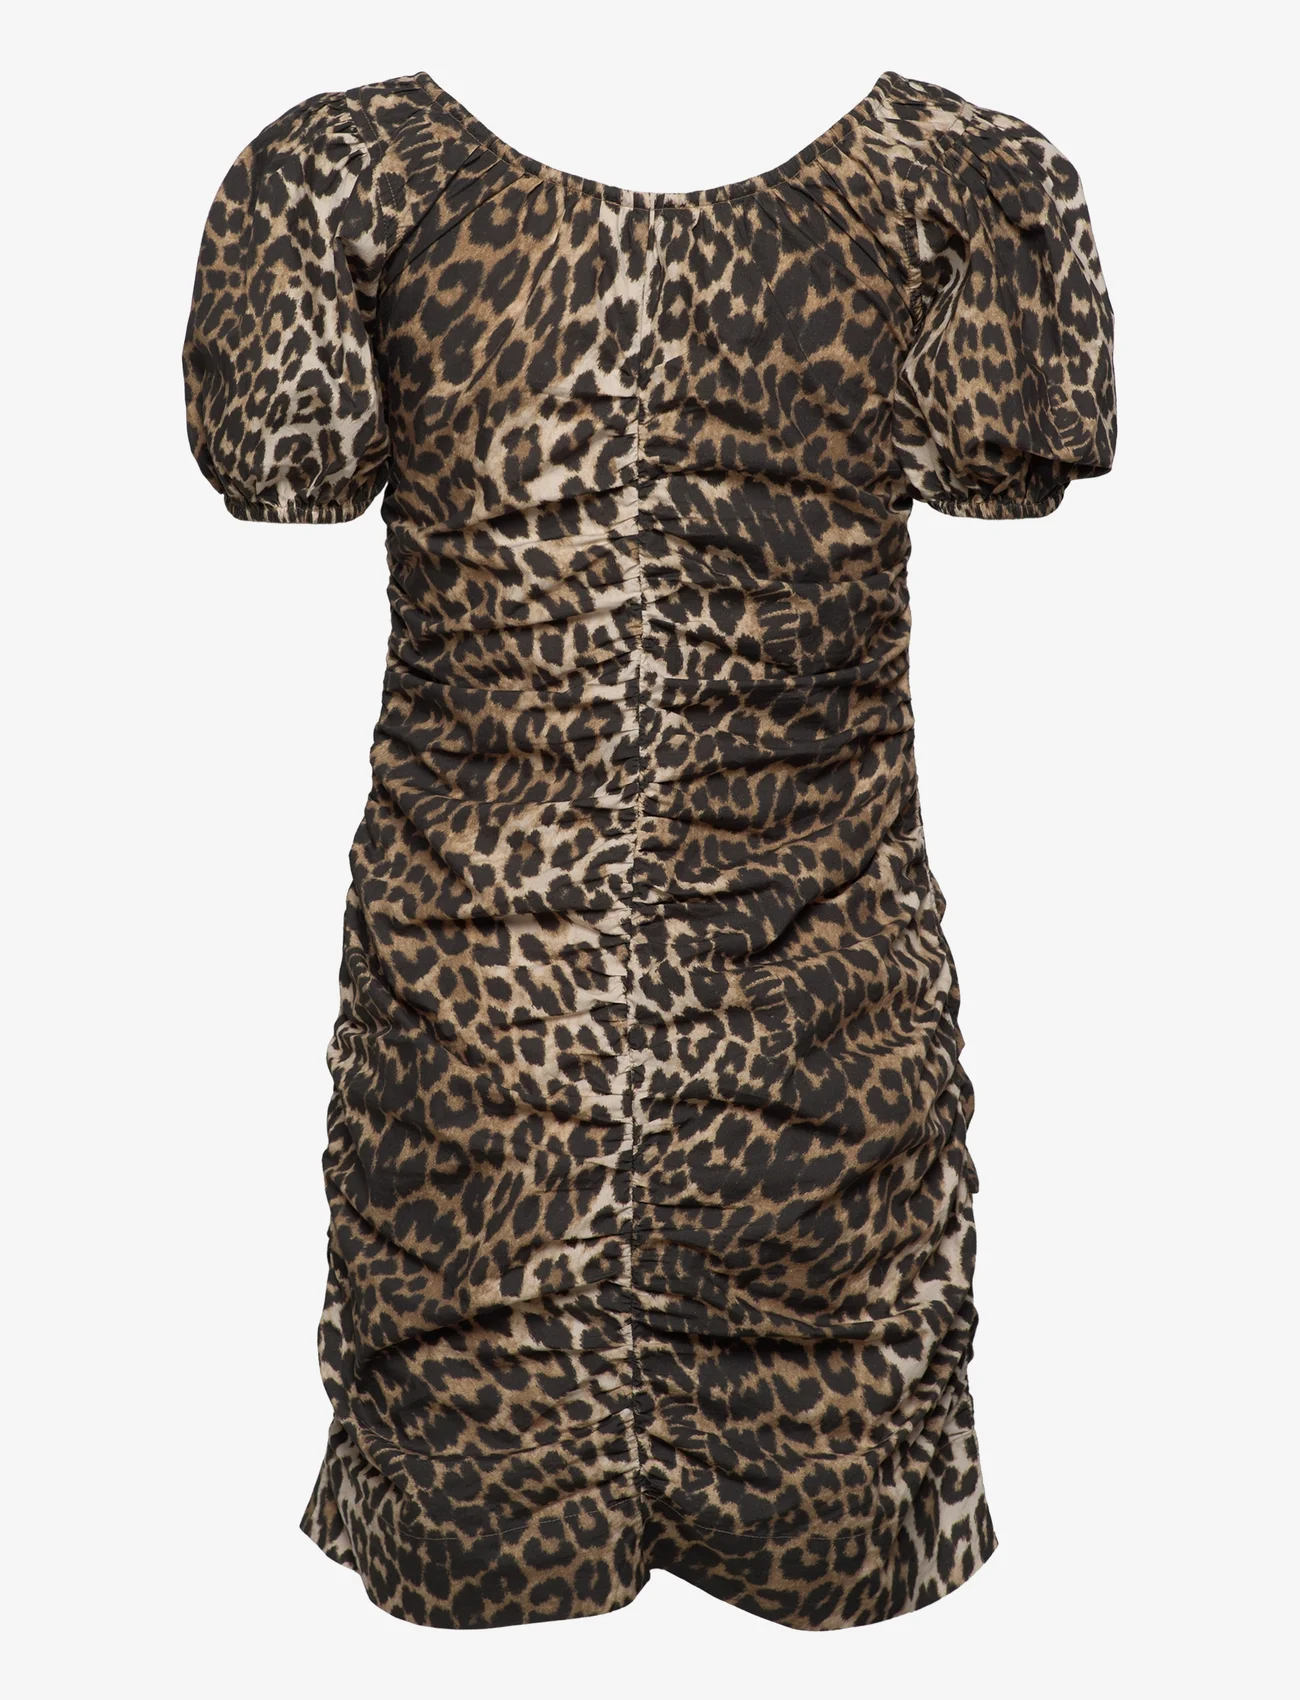 Ganni - Printed Cotton Poplin - stramme kjoler - big leopard almond milk - 1